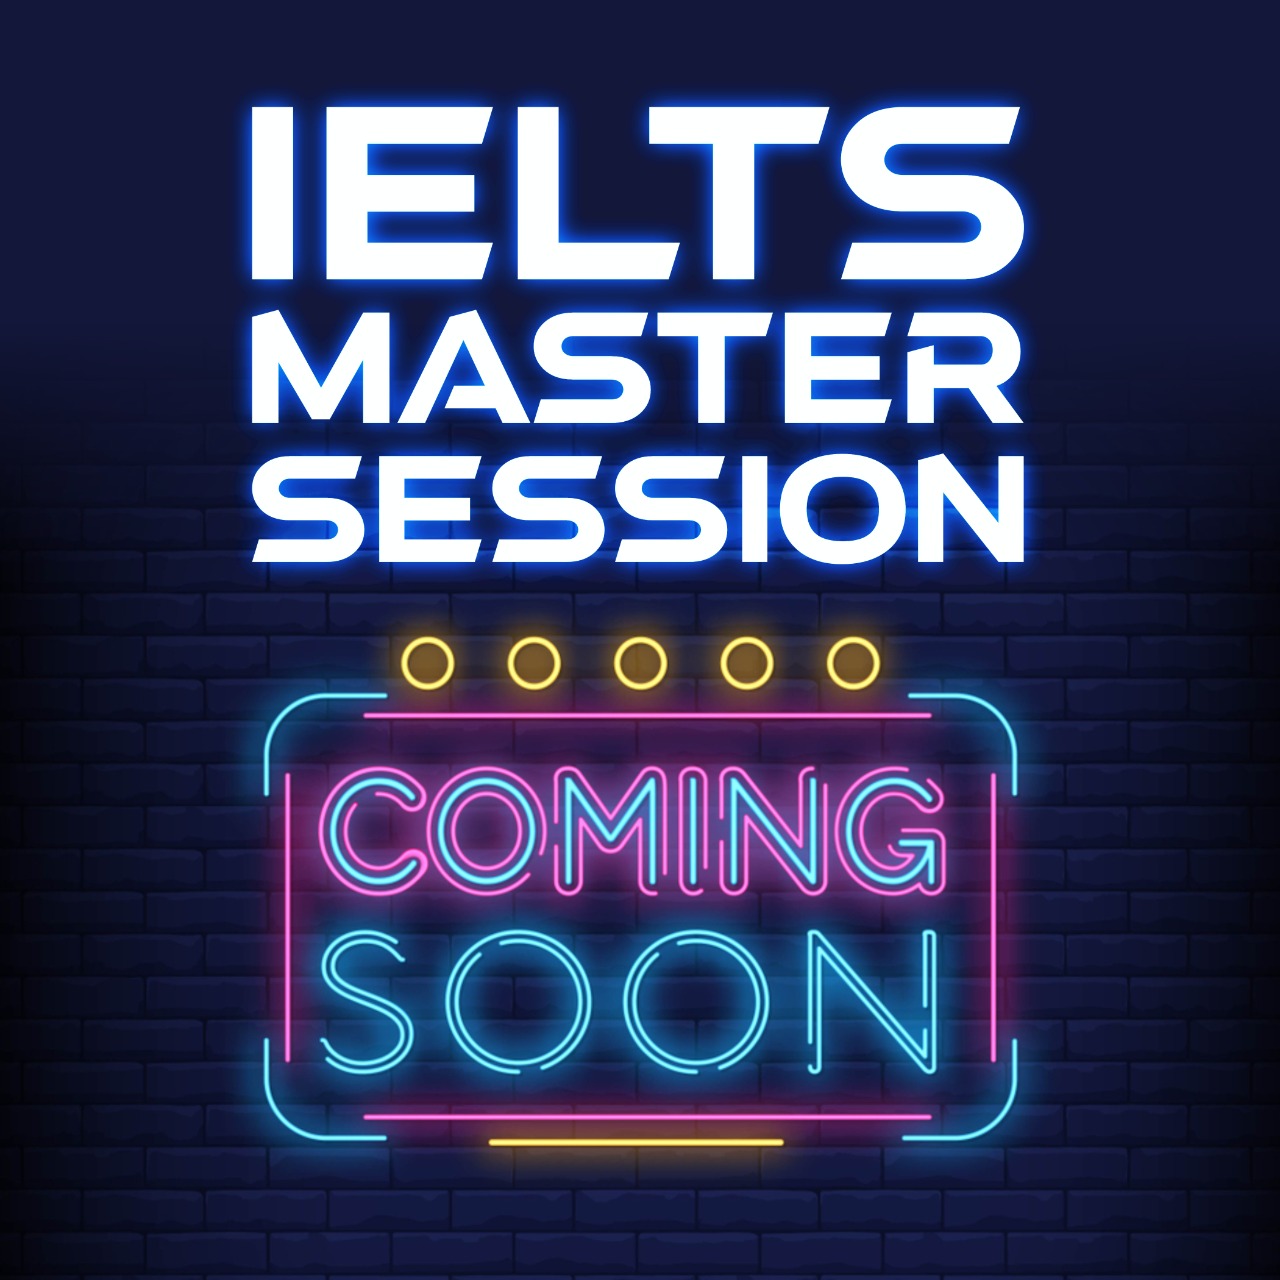 IELTS master Session, IELTS event, ssceduction event